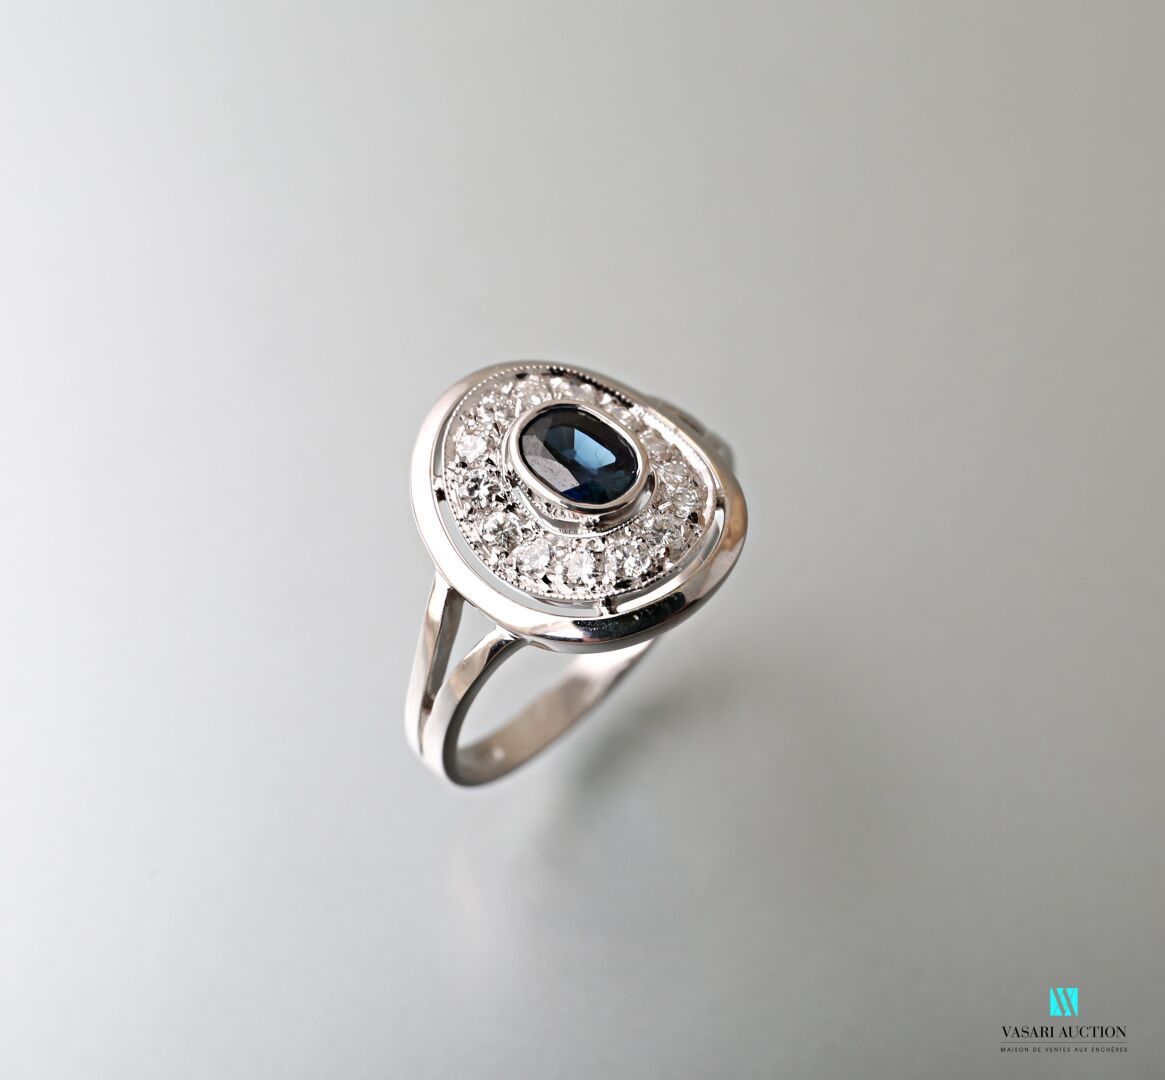 Null 750千分之一的白金椭圆形戒指，中央装饰有一颗约1.20克拉的椭圆形蓝宝石，采用封闭式镶嵌，边上有一排圆钻。

毛重：4.60克 - 手指尺寸：56